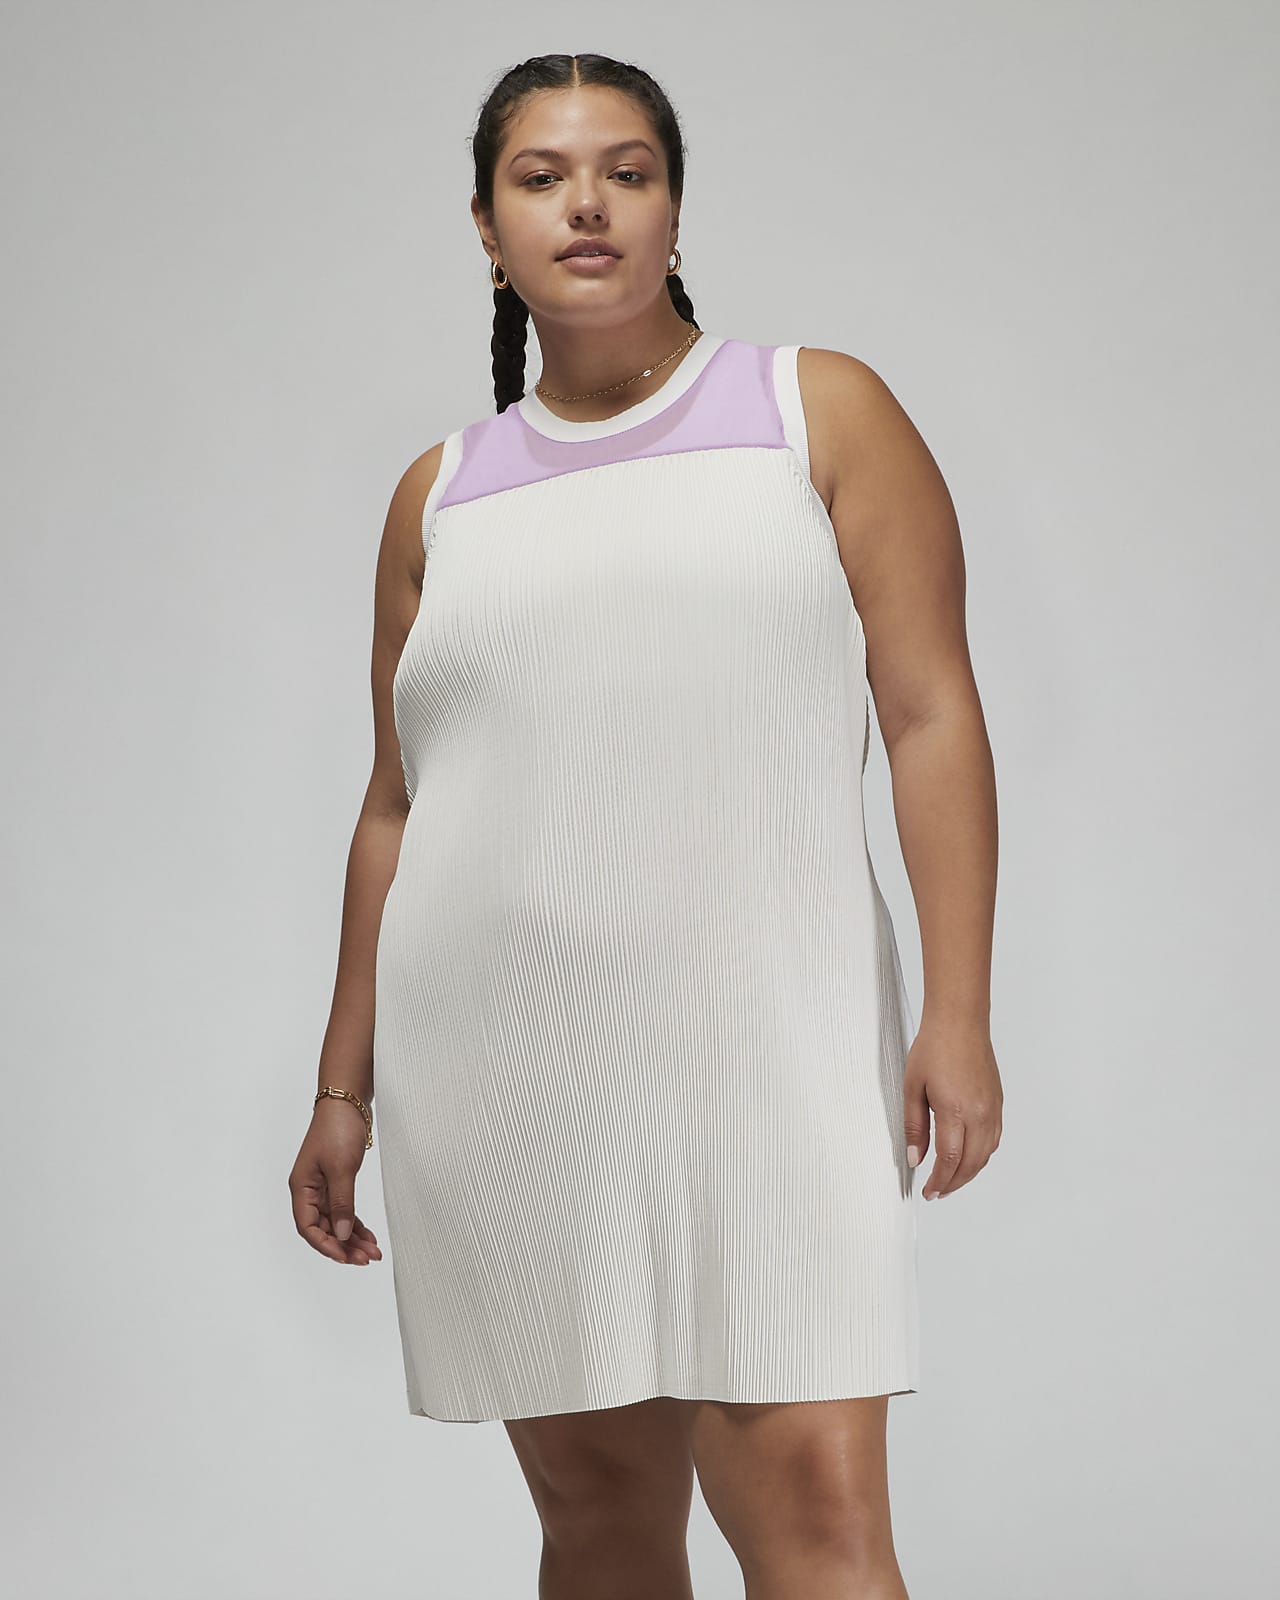 Jordan 23 Engineered Women's Dress Size).